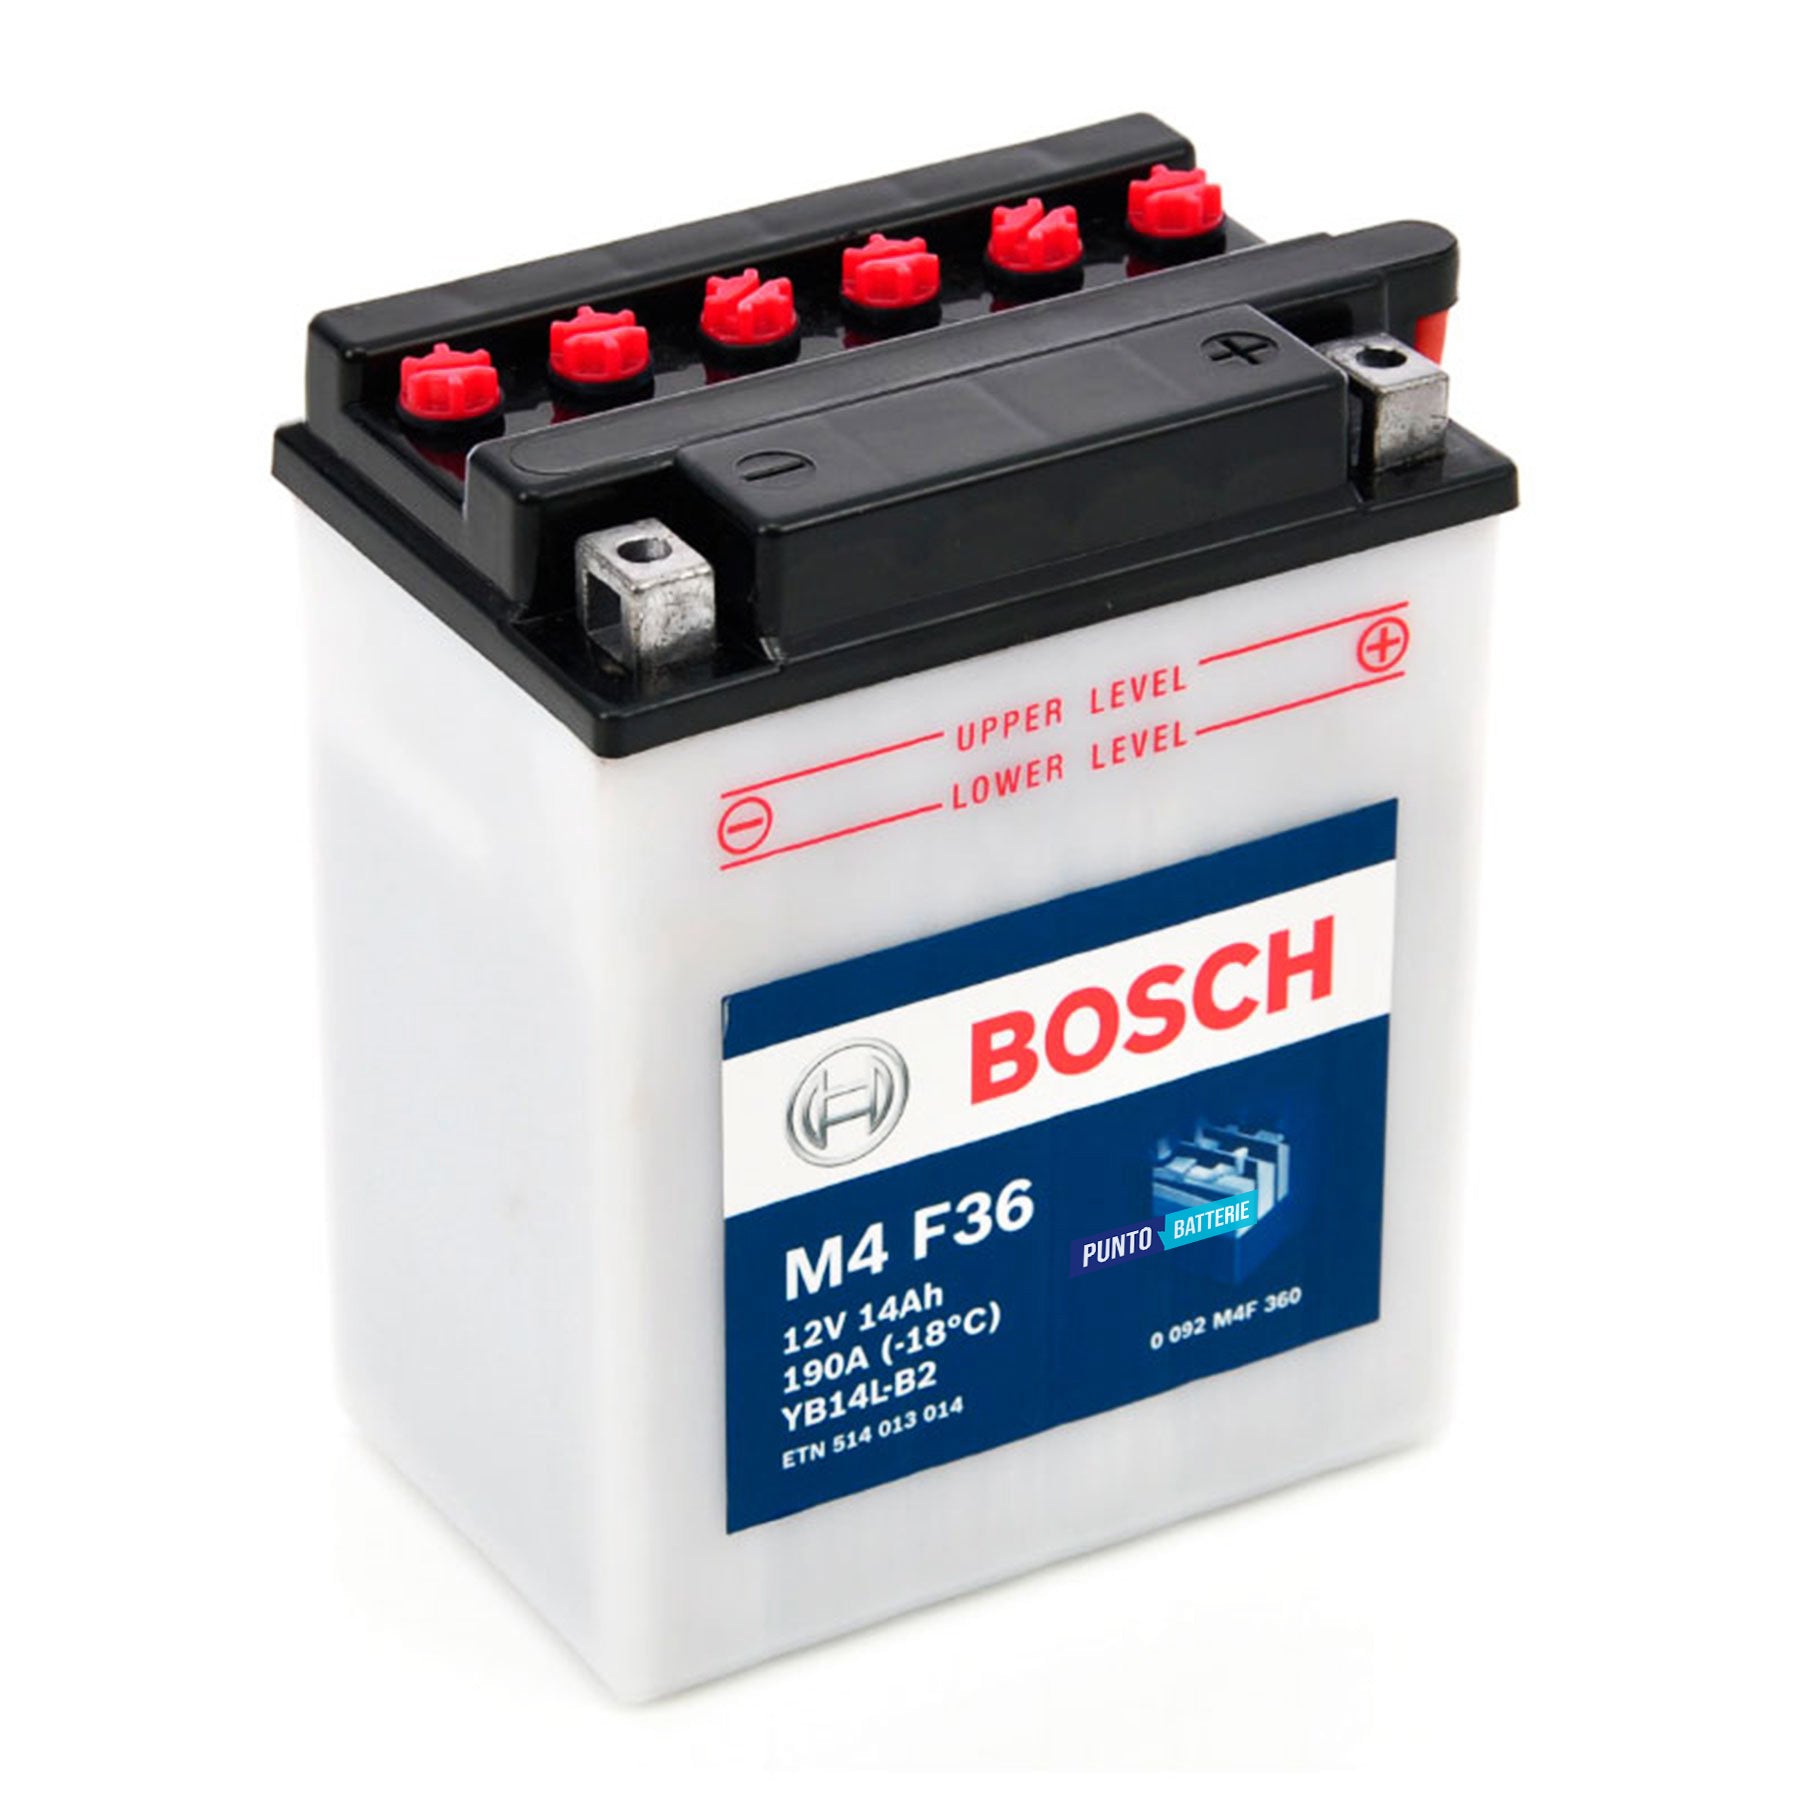 Batteria Bosch M4 F36 - M4 (12V, 14Ah, 190A) - Puntobatterie